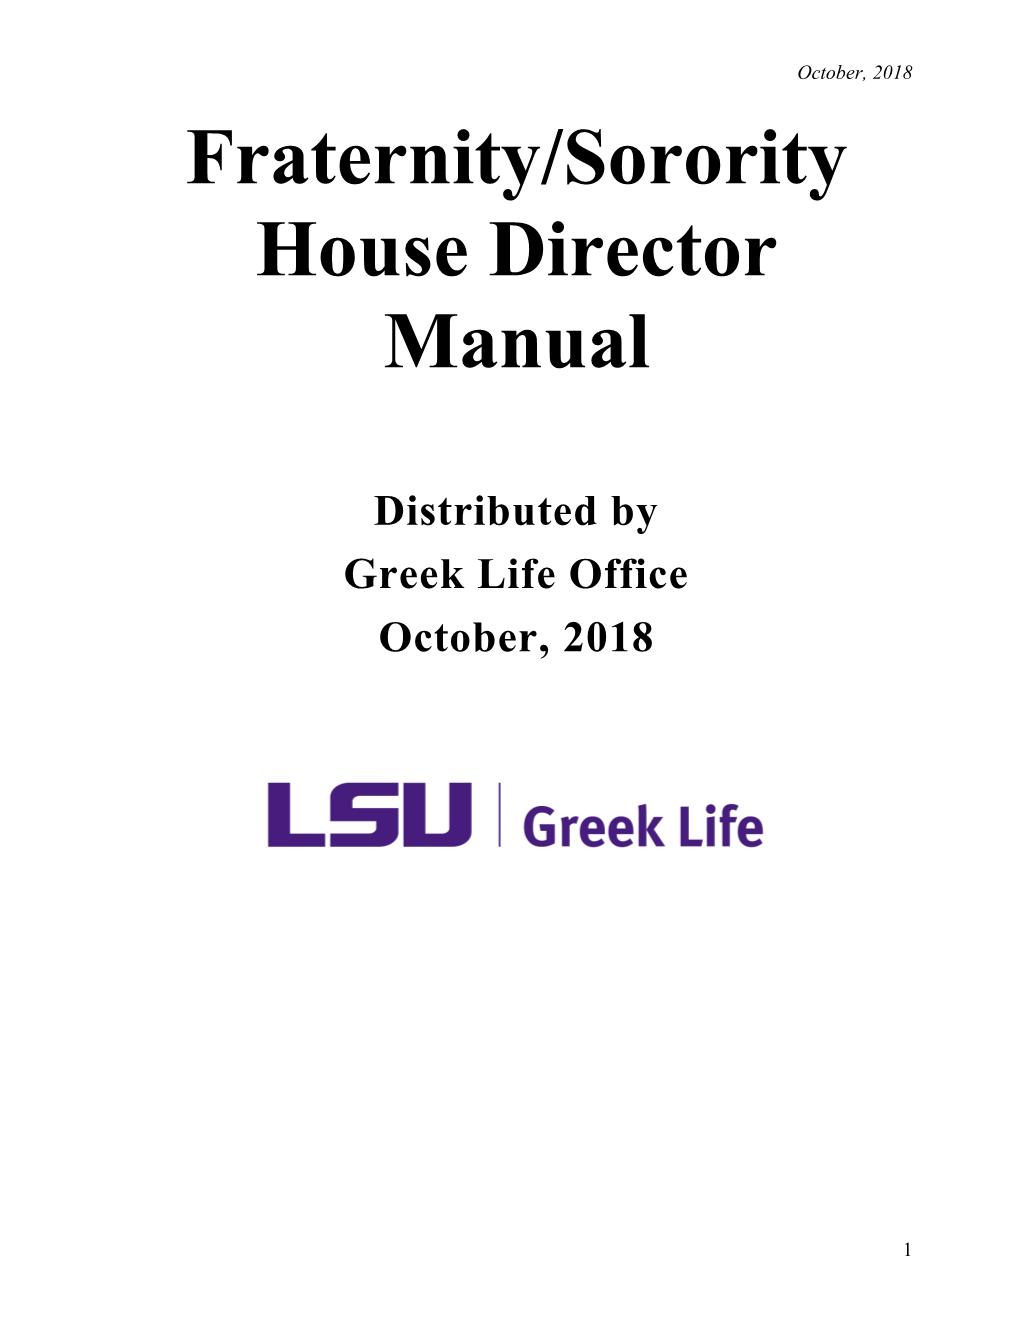 Fraternity/Sorority House Director Manual